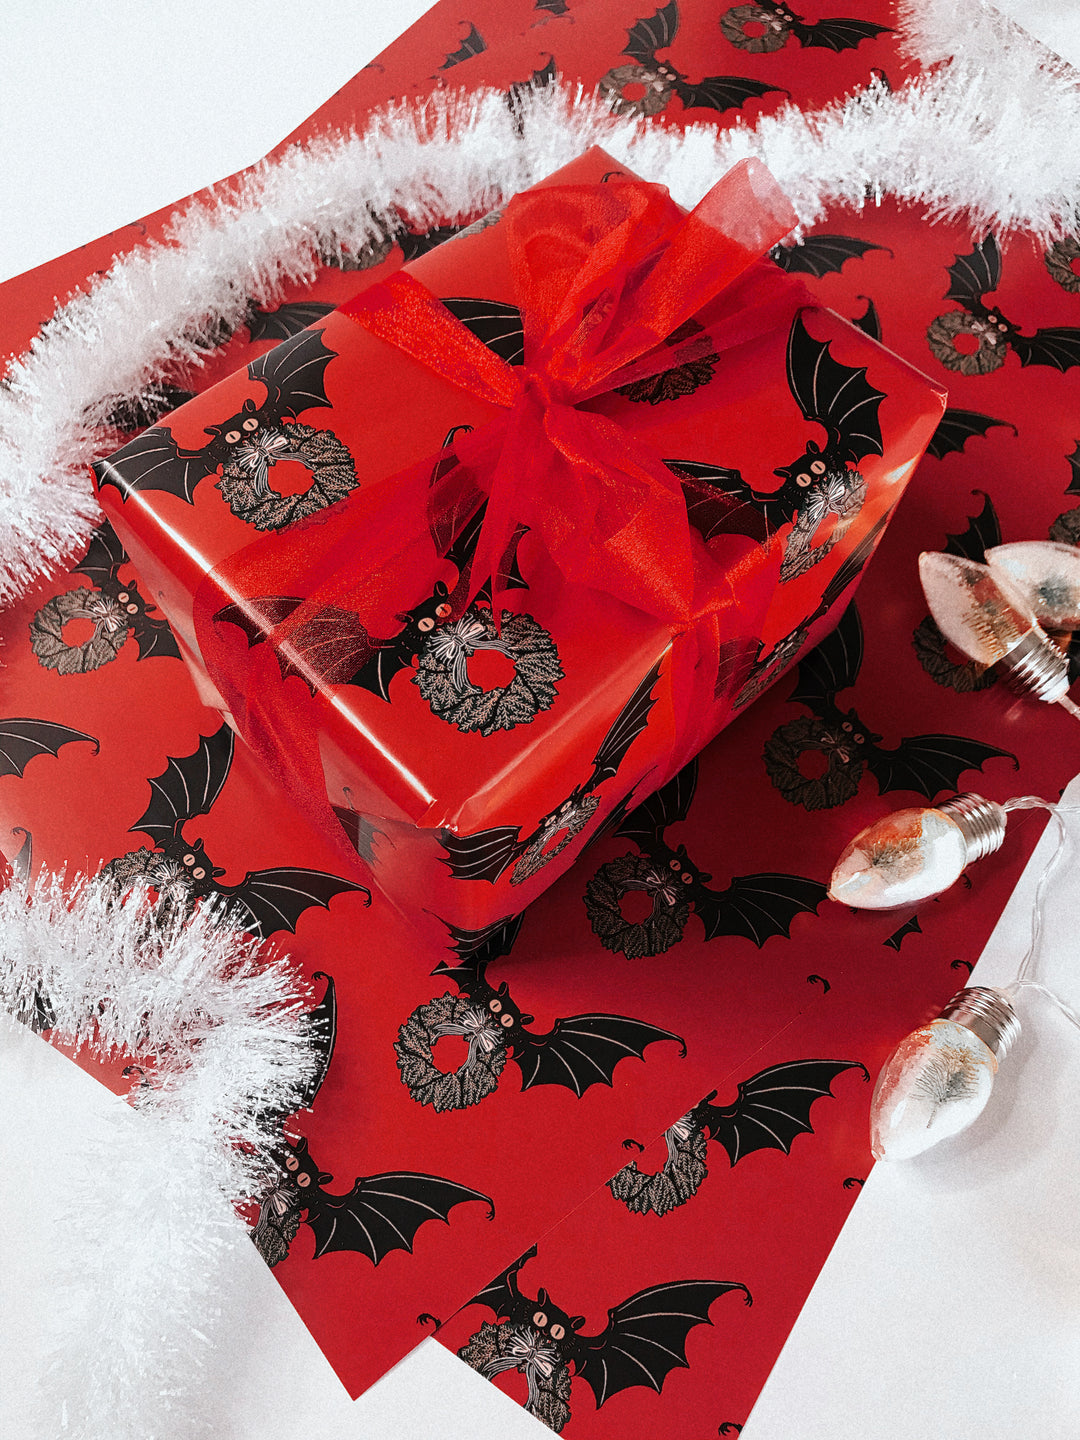 Creepmas Bat Gift Wrap | Creepmas Wrapping Paper